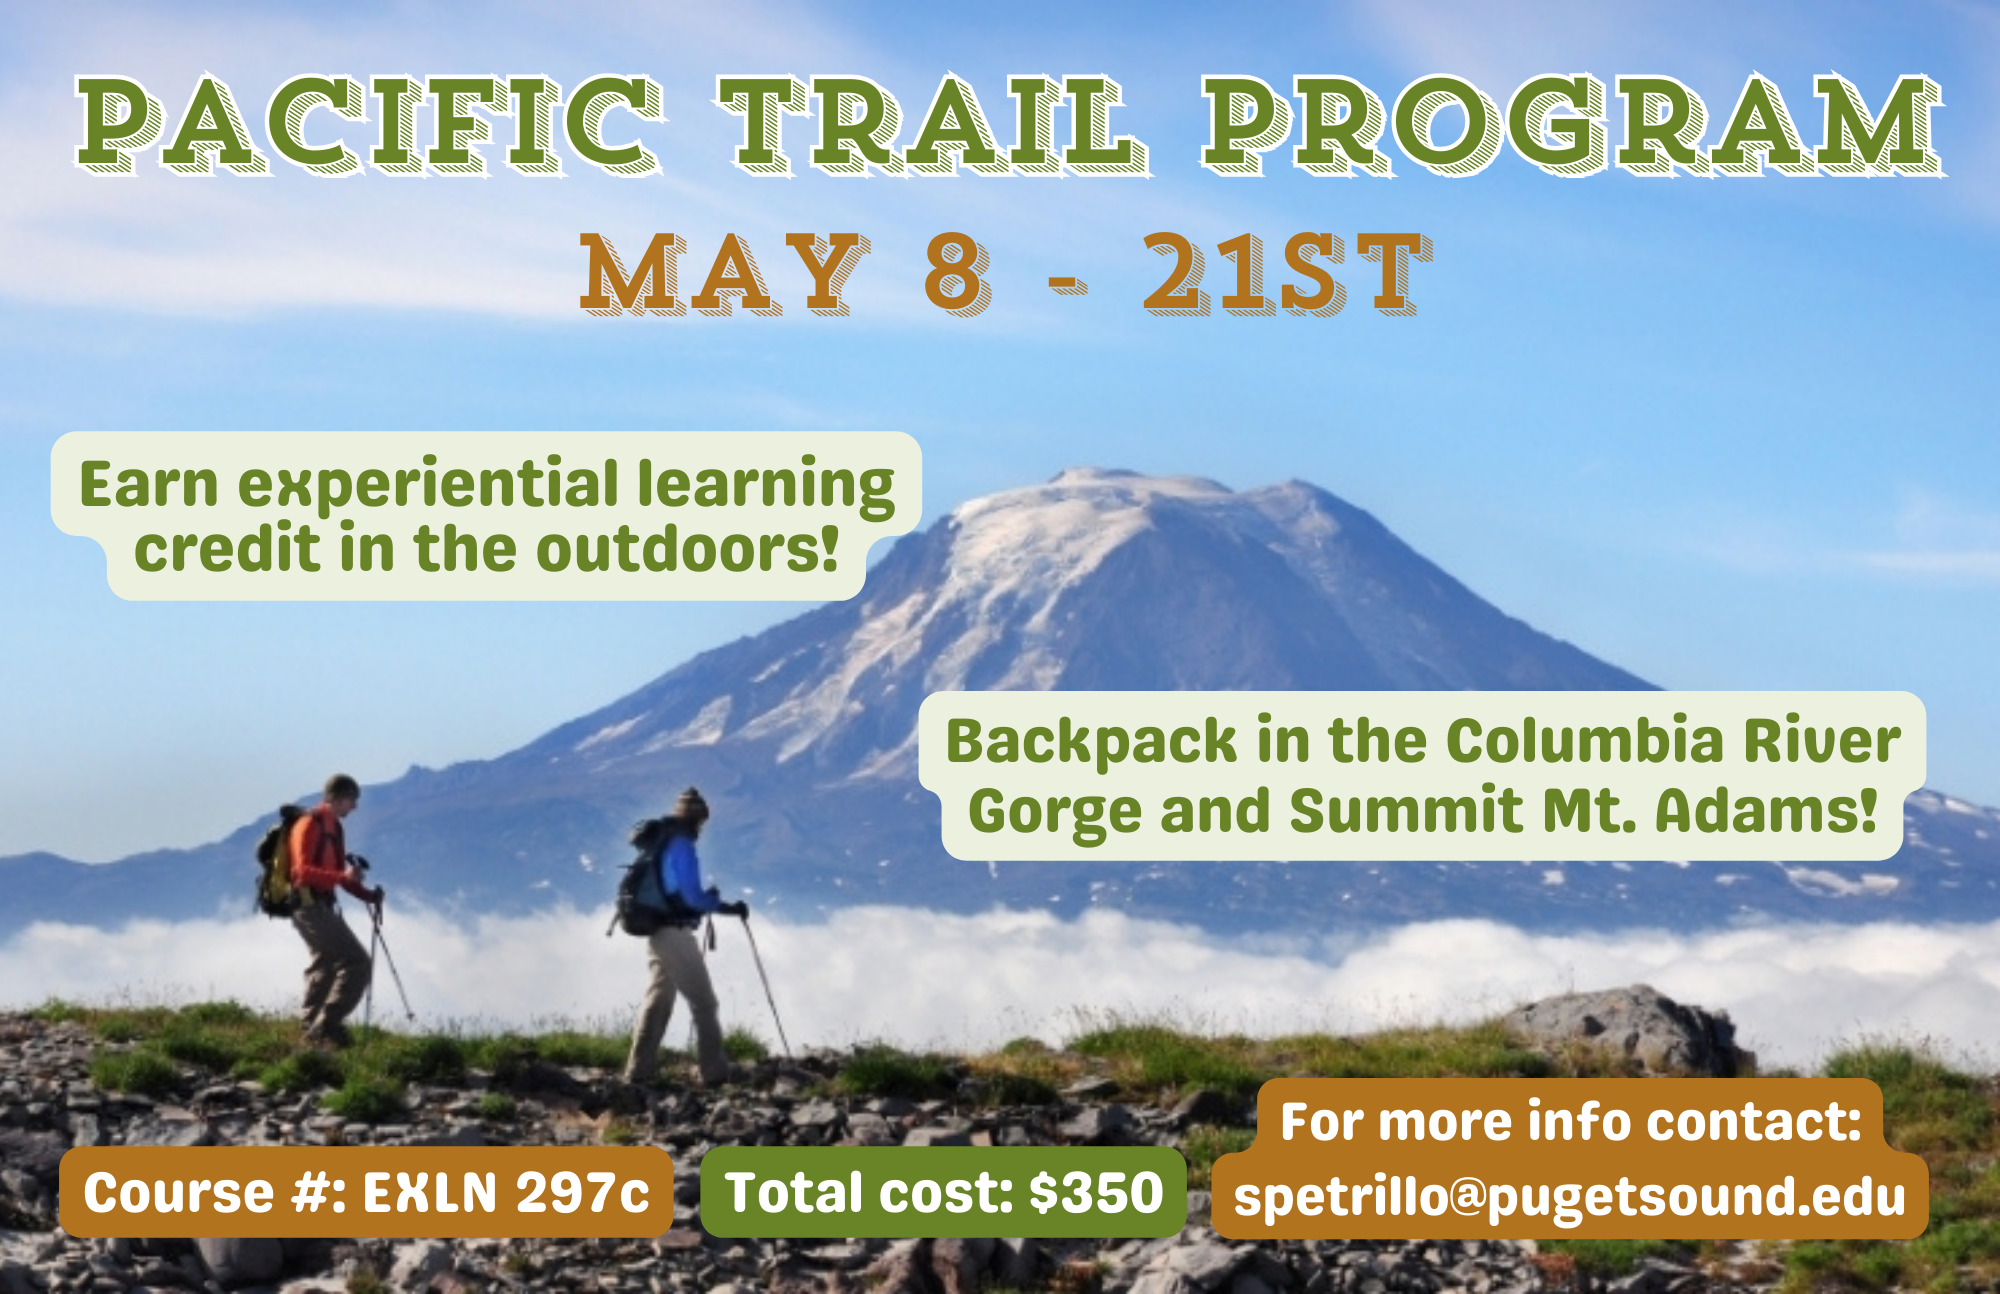 Pacific Trail Program